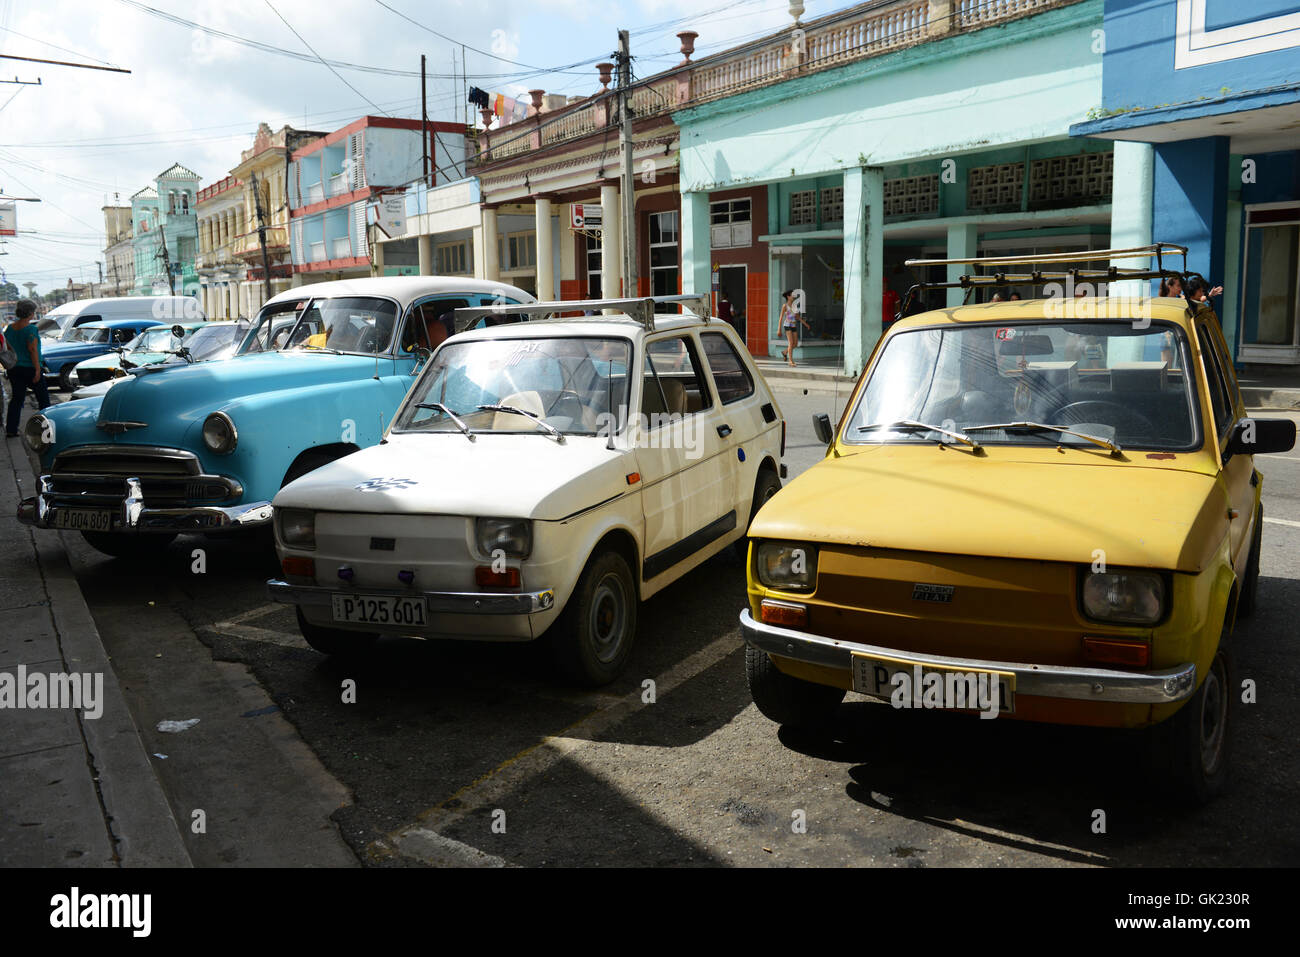 Polski Fiat cars in Cuba. Stock Photo